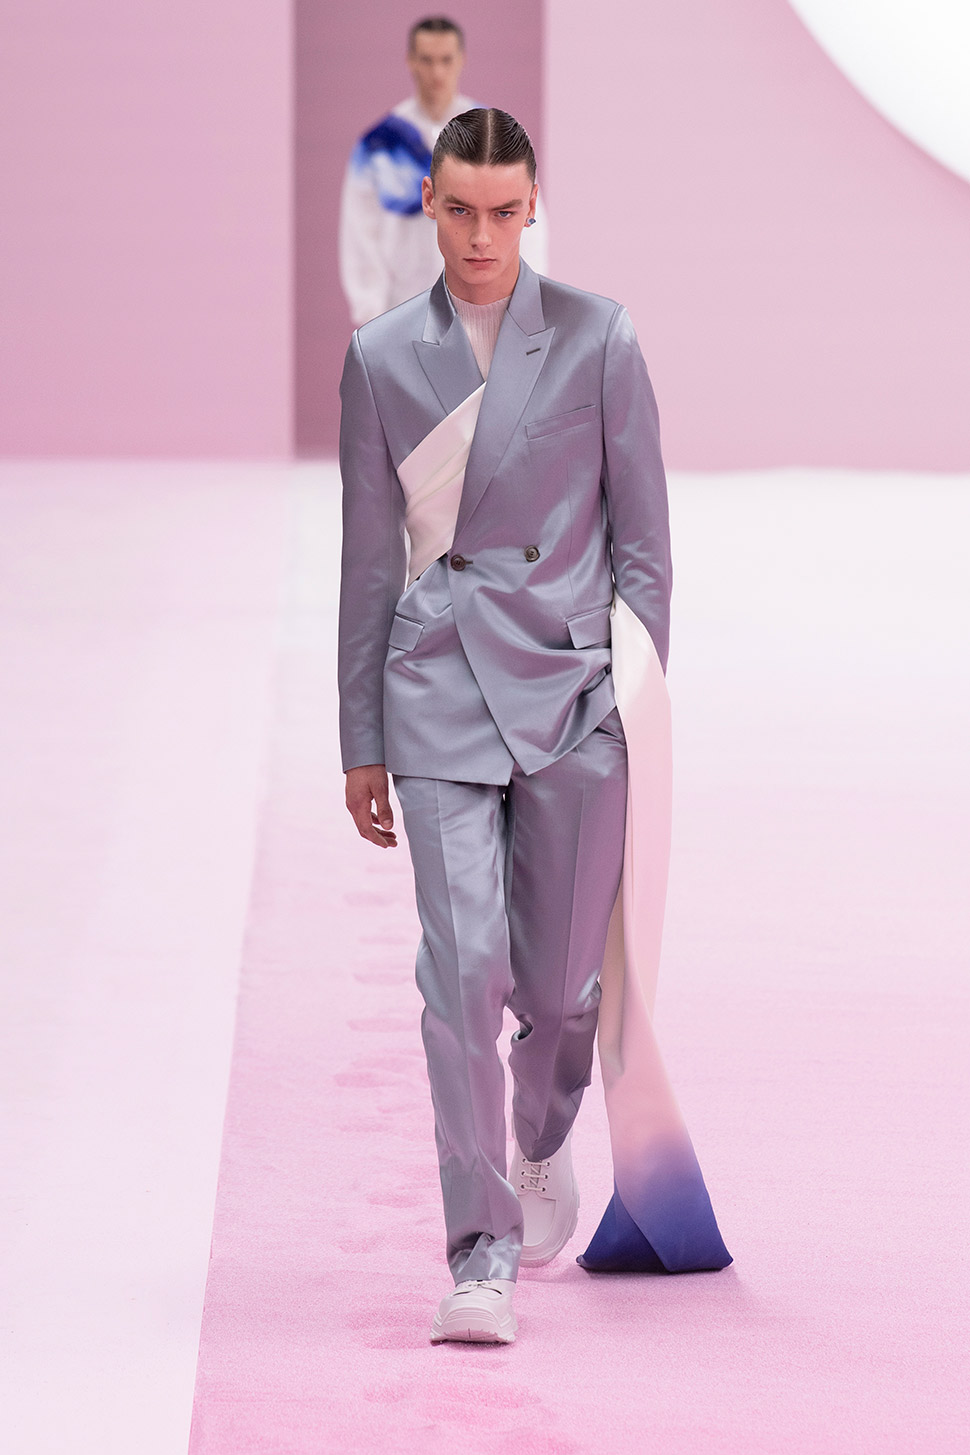 Dior Men Summer 2020 Collection Now in Manila